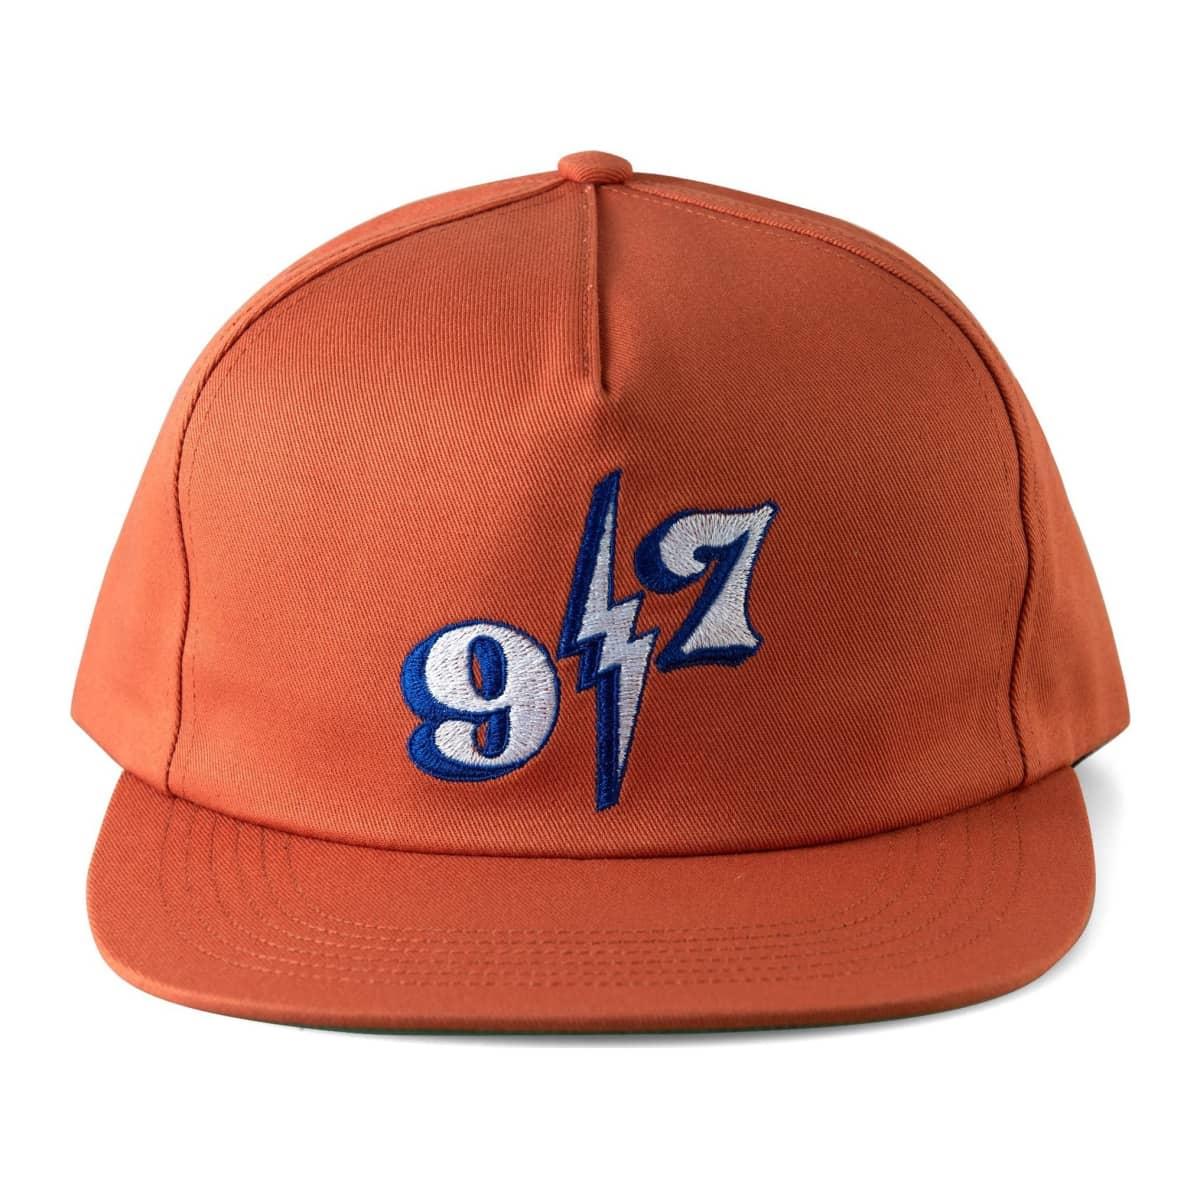 Appelez-moi 917 - Bolt Orange Snapback orange